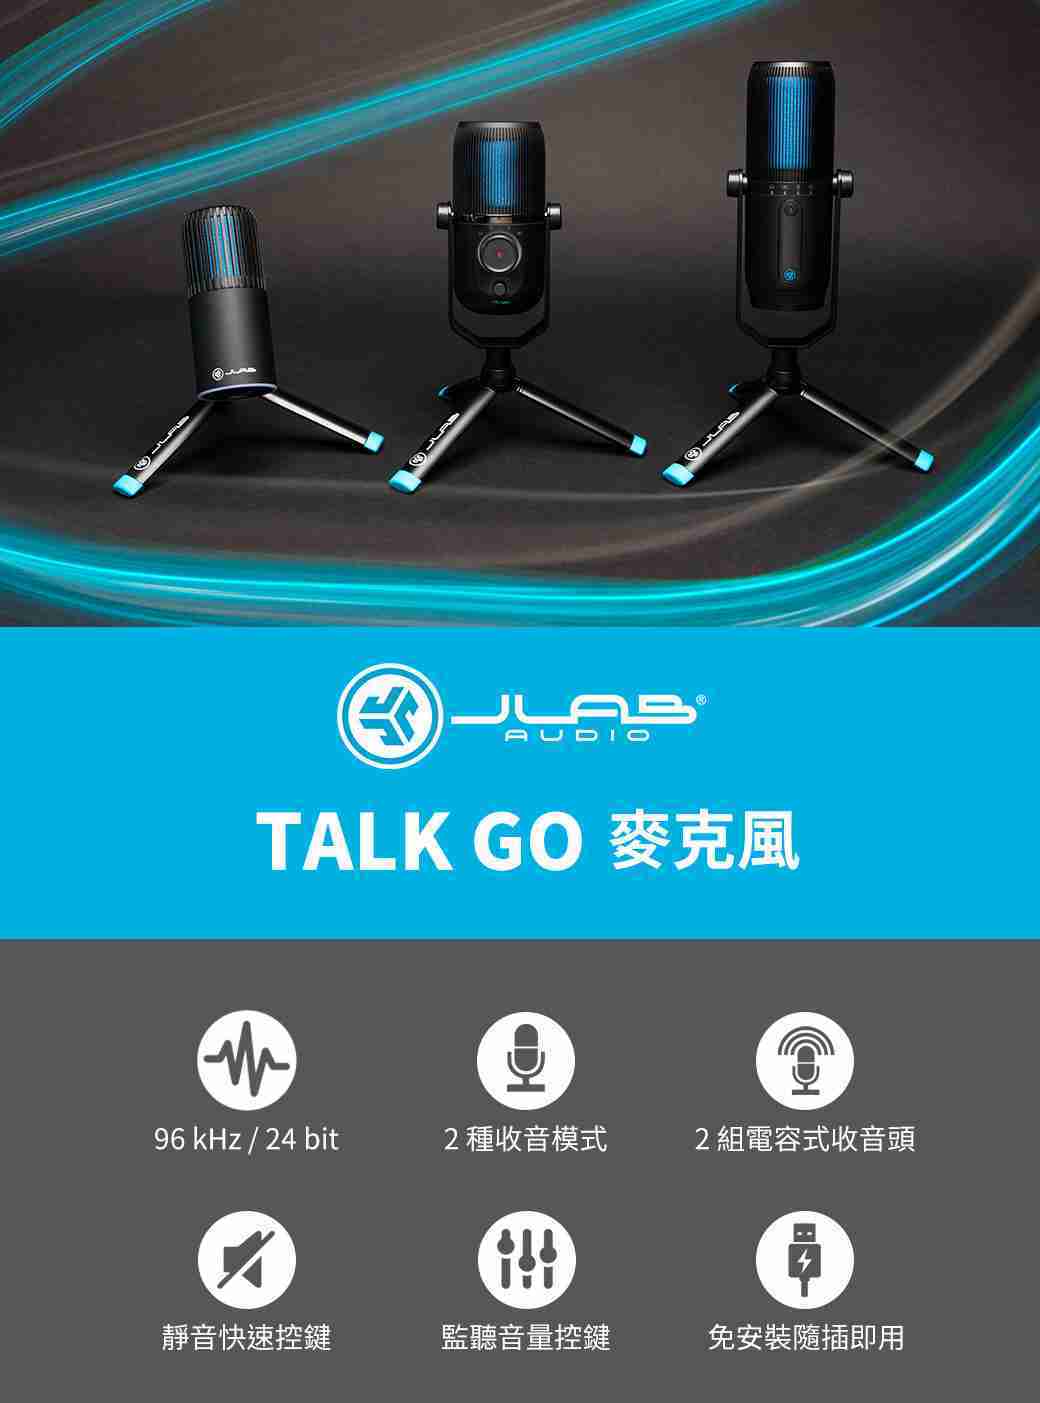 JLab TALK GO USB 全指向 無延遲 心形 麥克風 | My Ear 耳機專門店